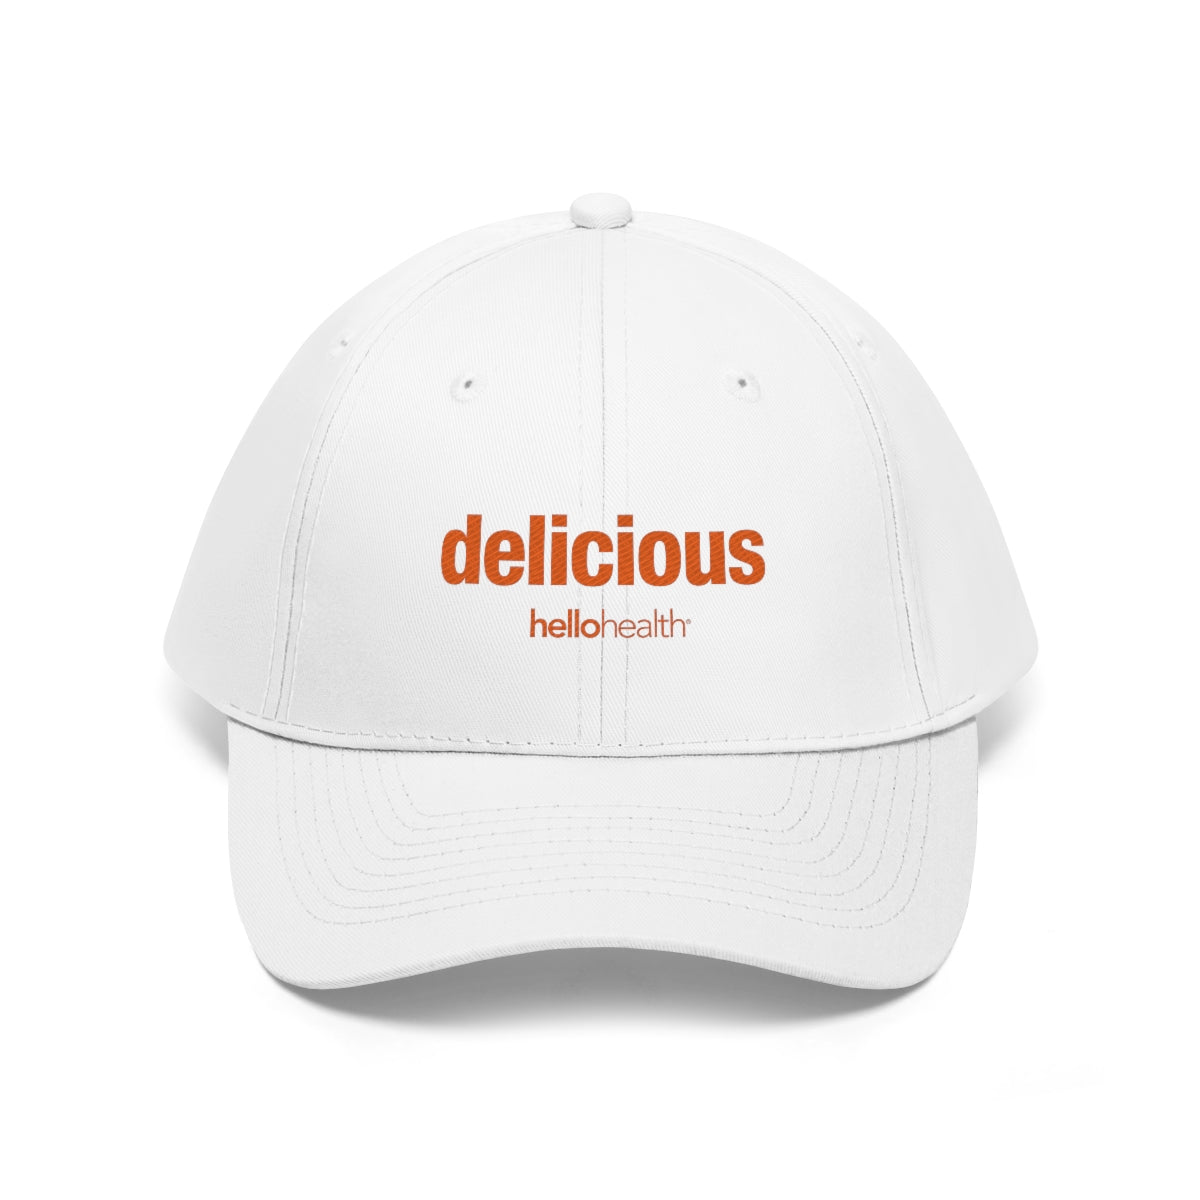 delicious Twill Hat